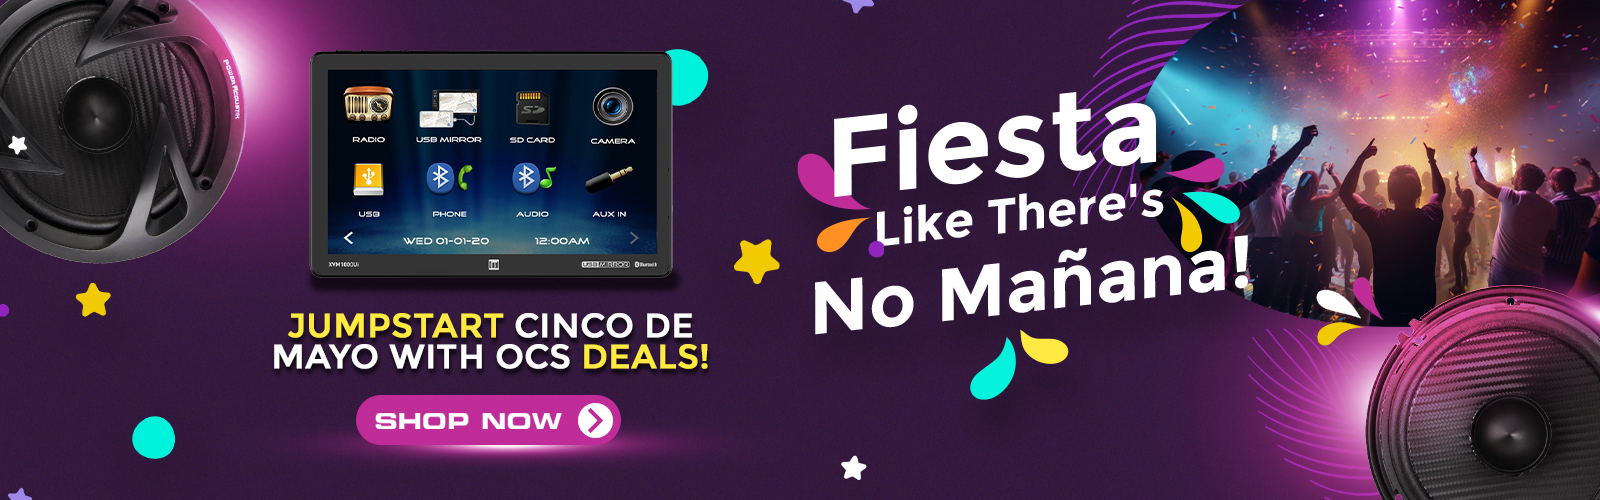 Fiesta Like There's No Mañana! Jumpstart Cinco de Mayo with OCS Deals!